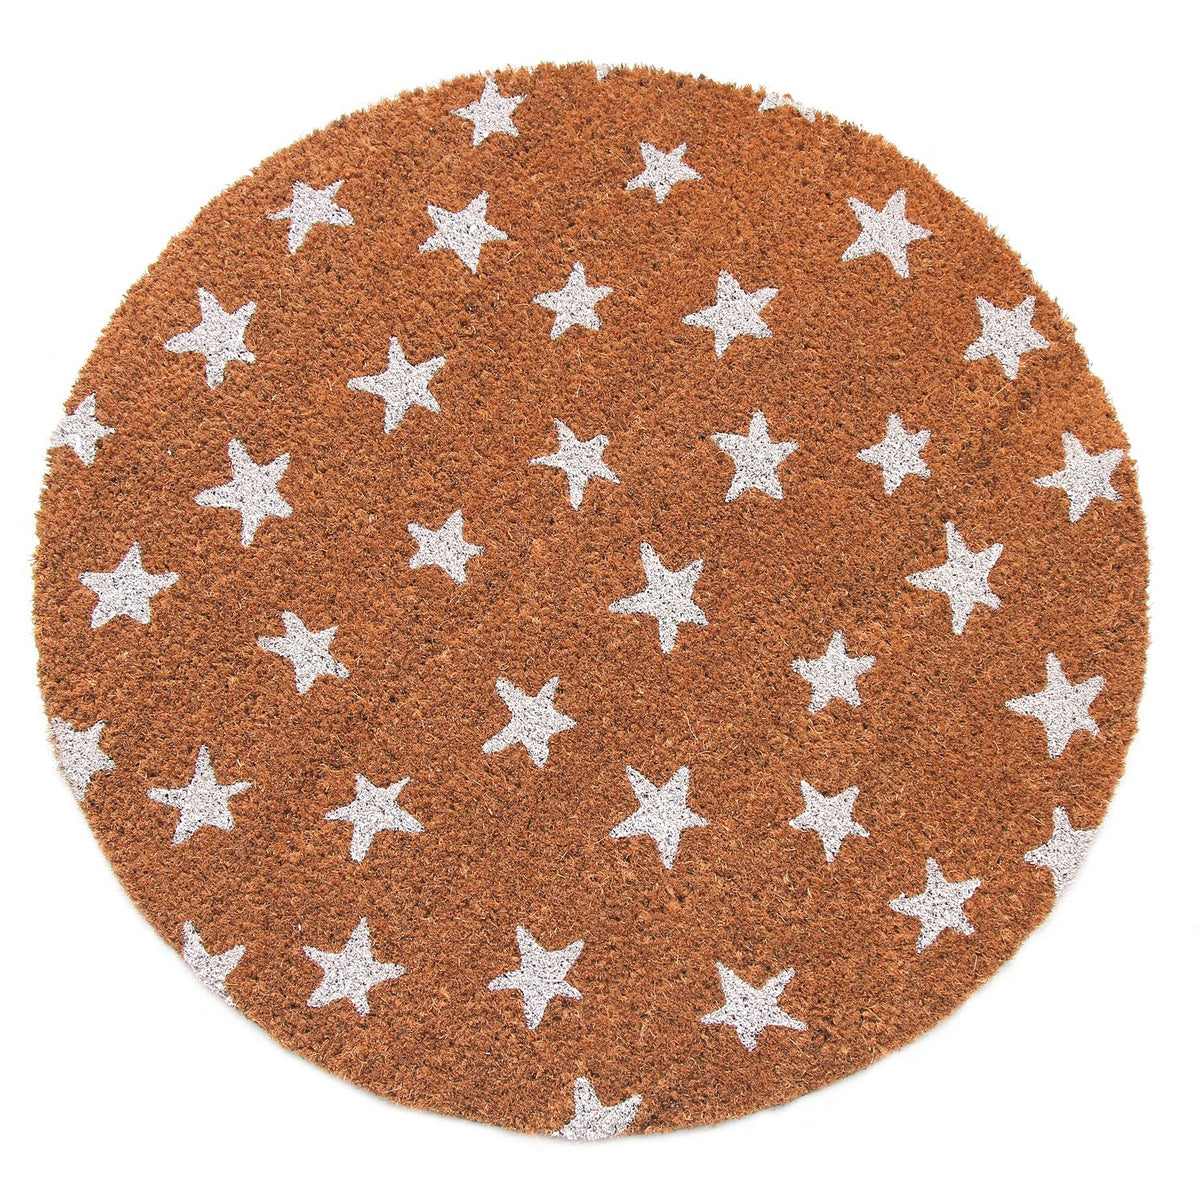 Elegant White Star printed Natural Printed Coir Round Shape Floor Mat - OnlyMat